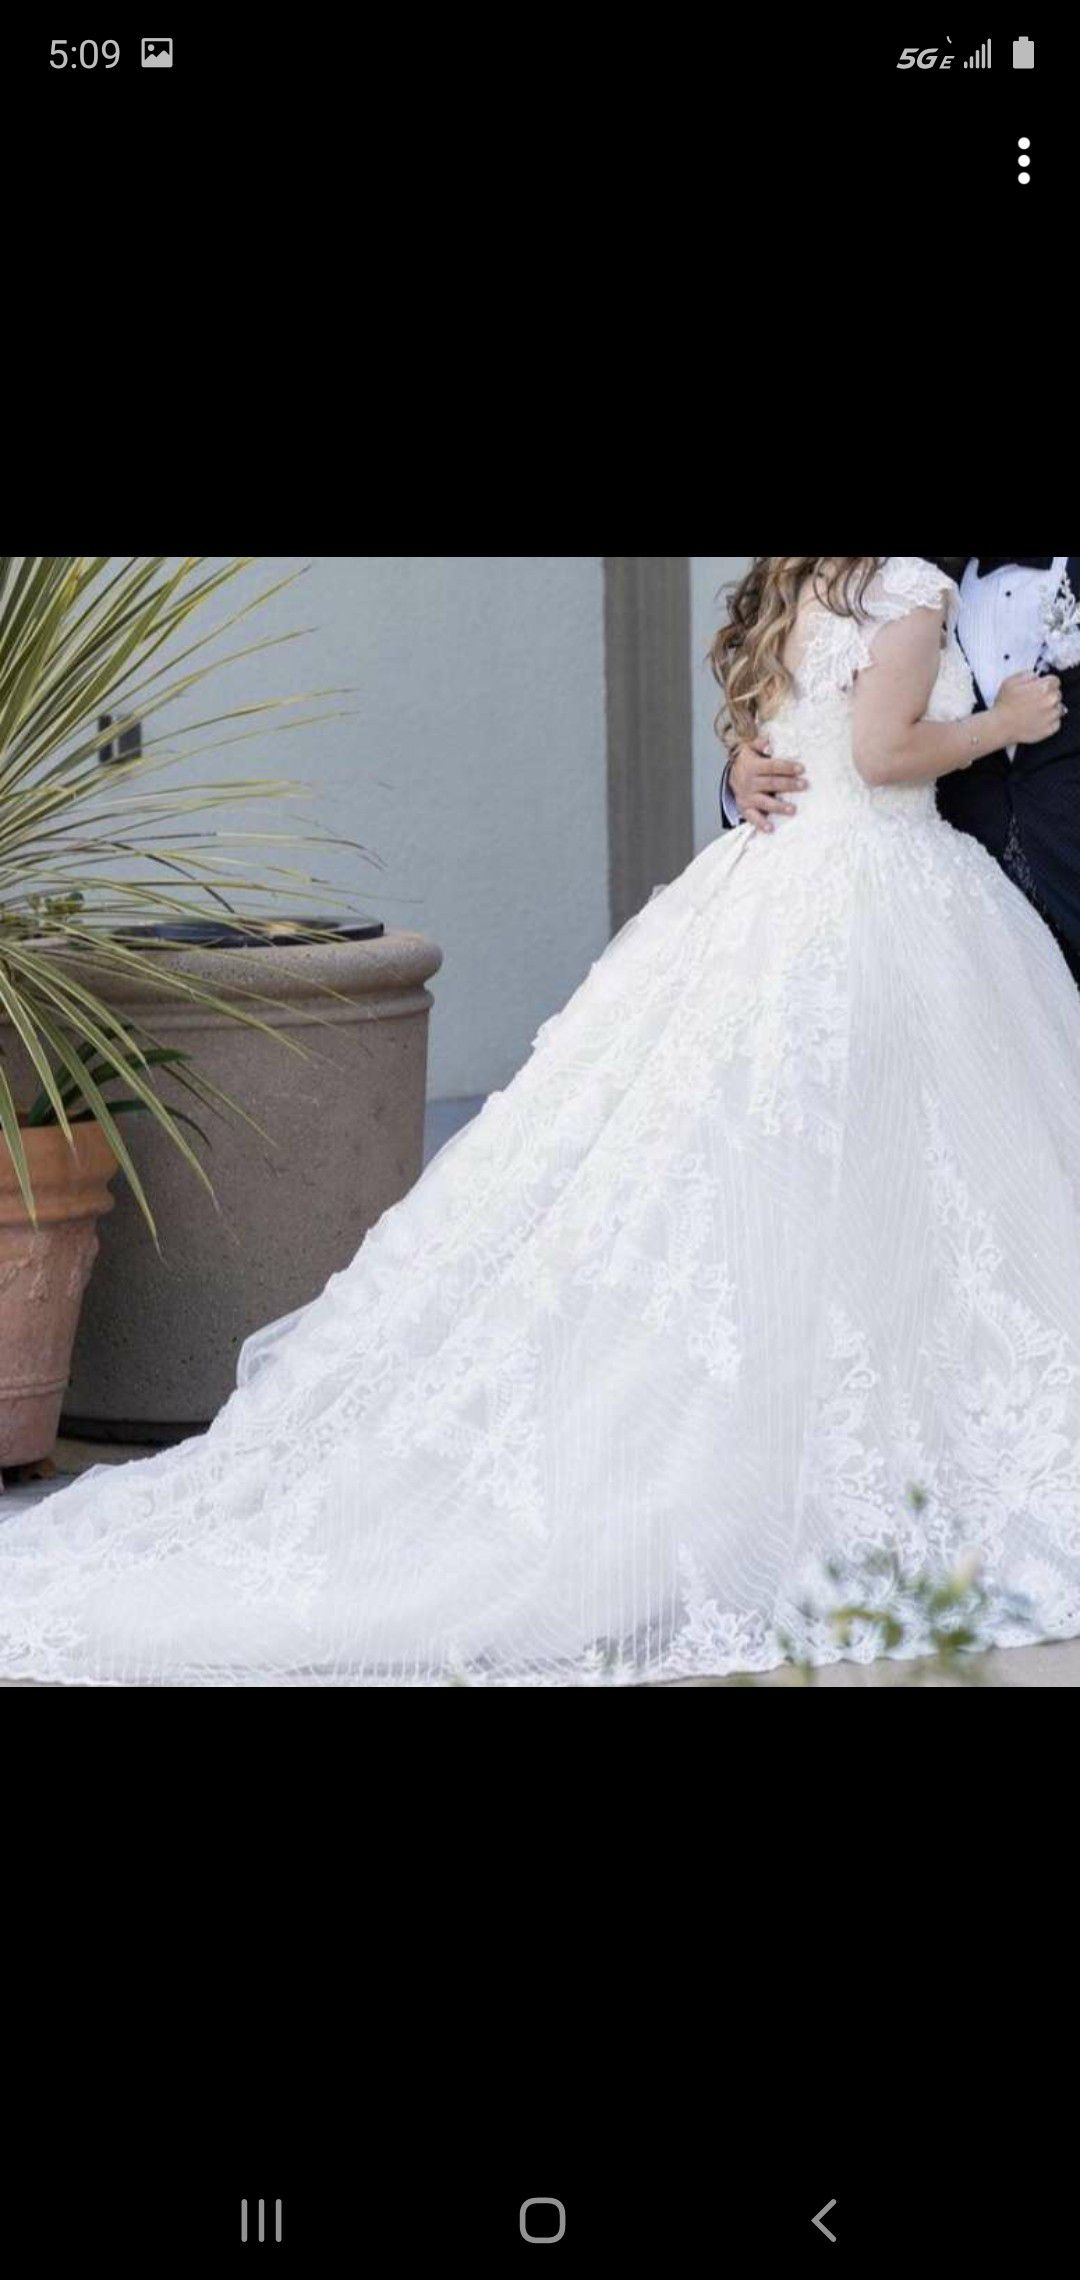 Size 42 euro wedding dress paid 3200